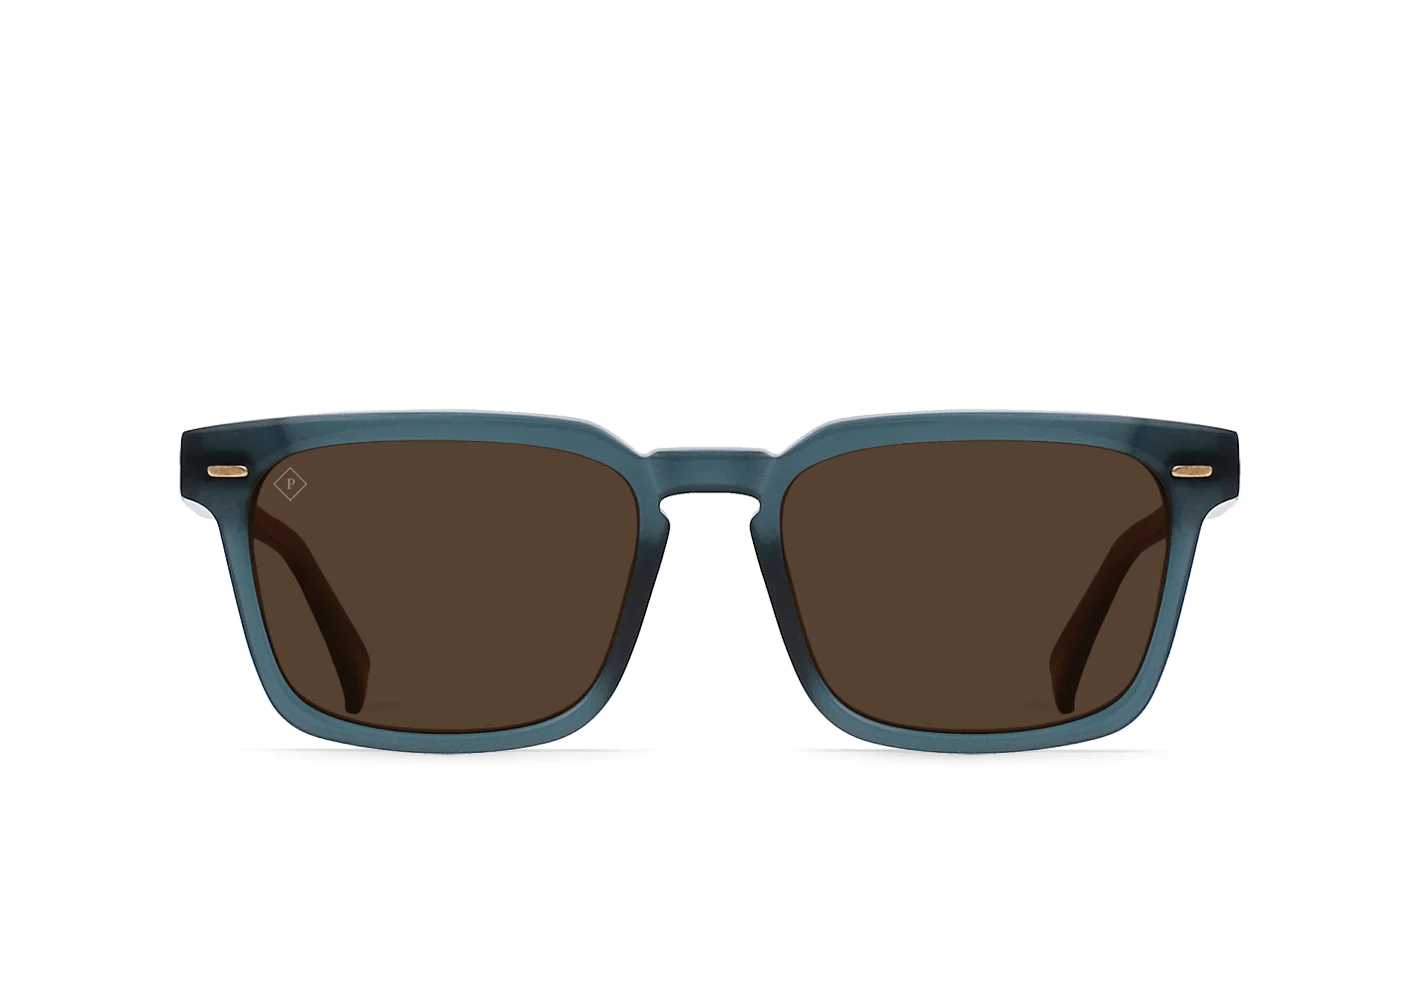 RAEN's Adin Men's Square Sunglasses with Cirus frames and Vibrant Brown Polarized lenses